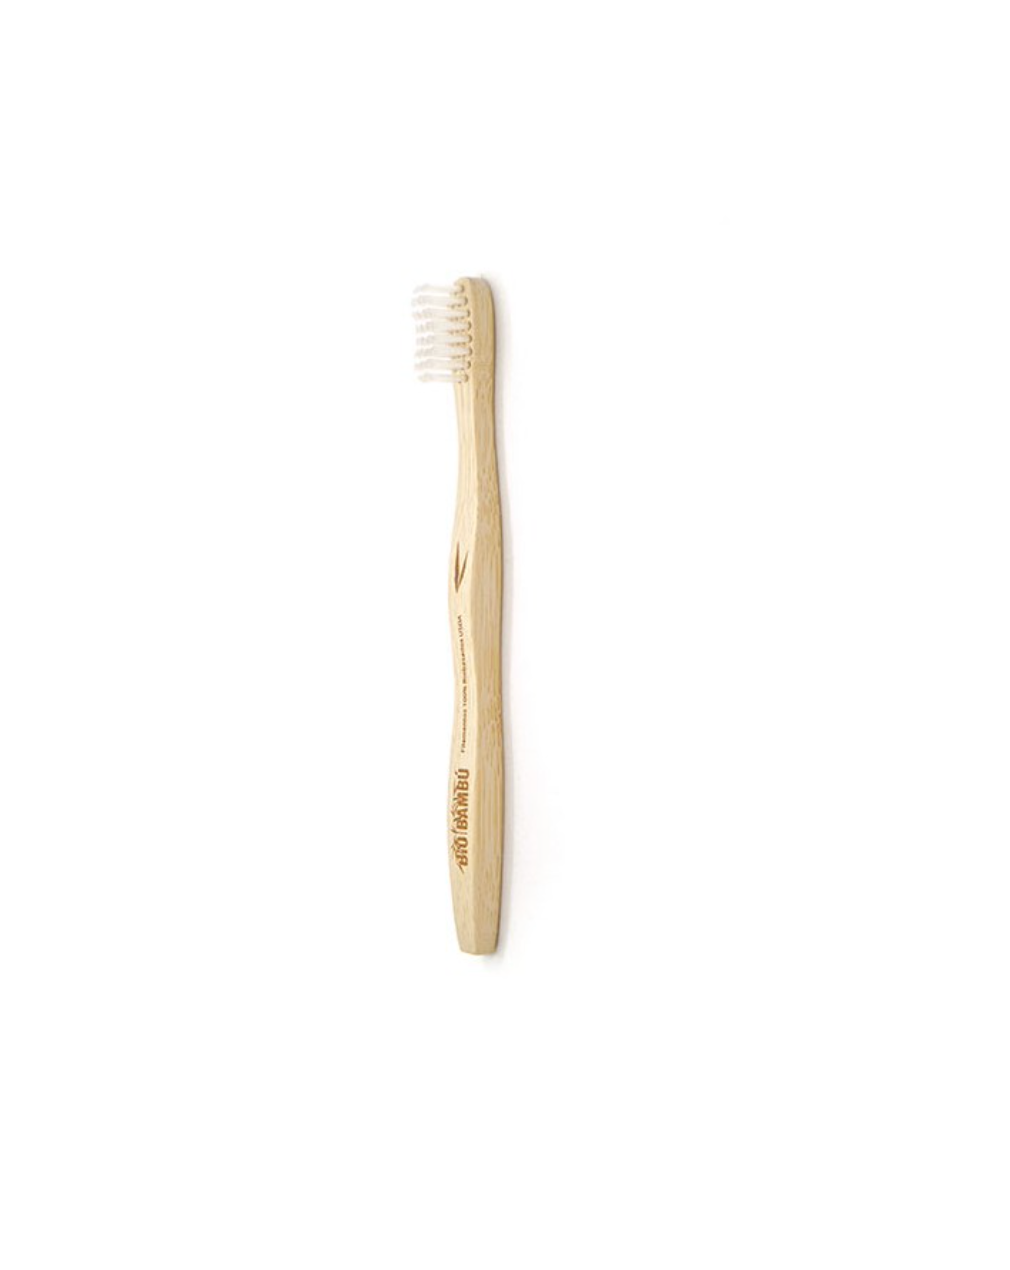 Cepillo dientes infantil bambú